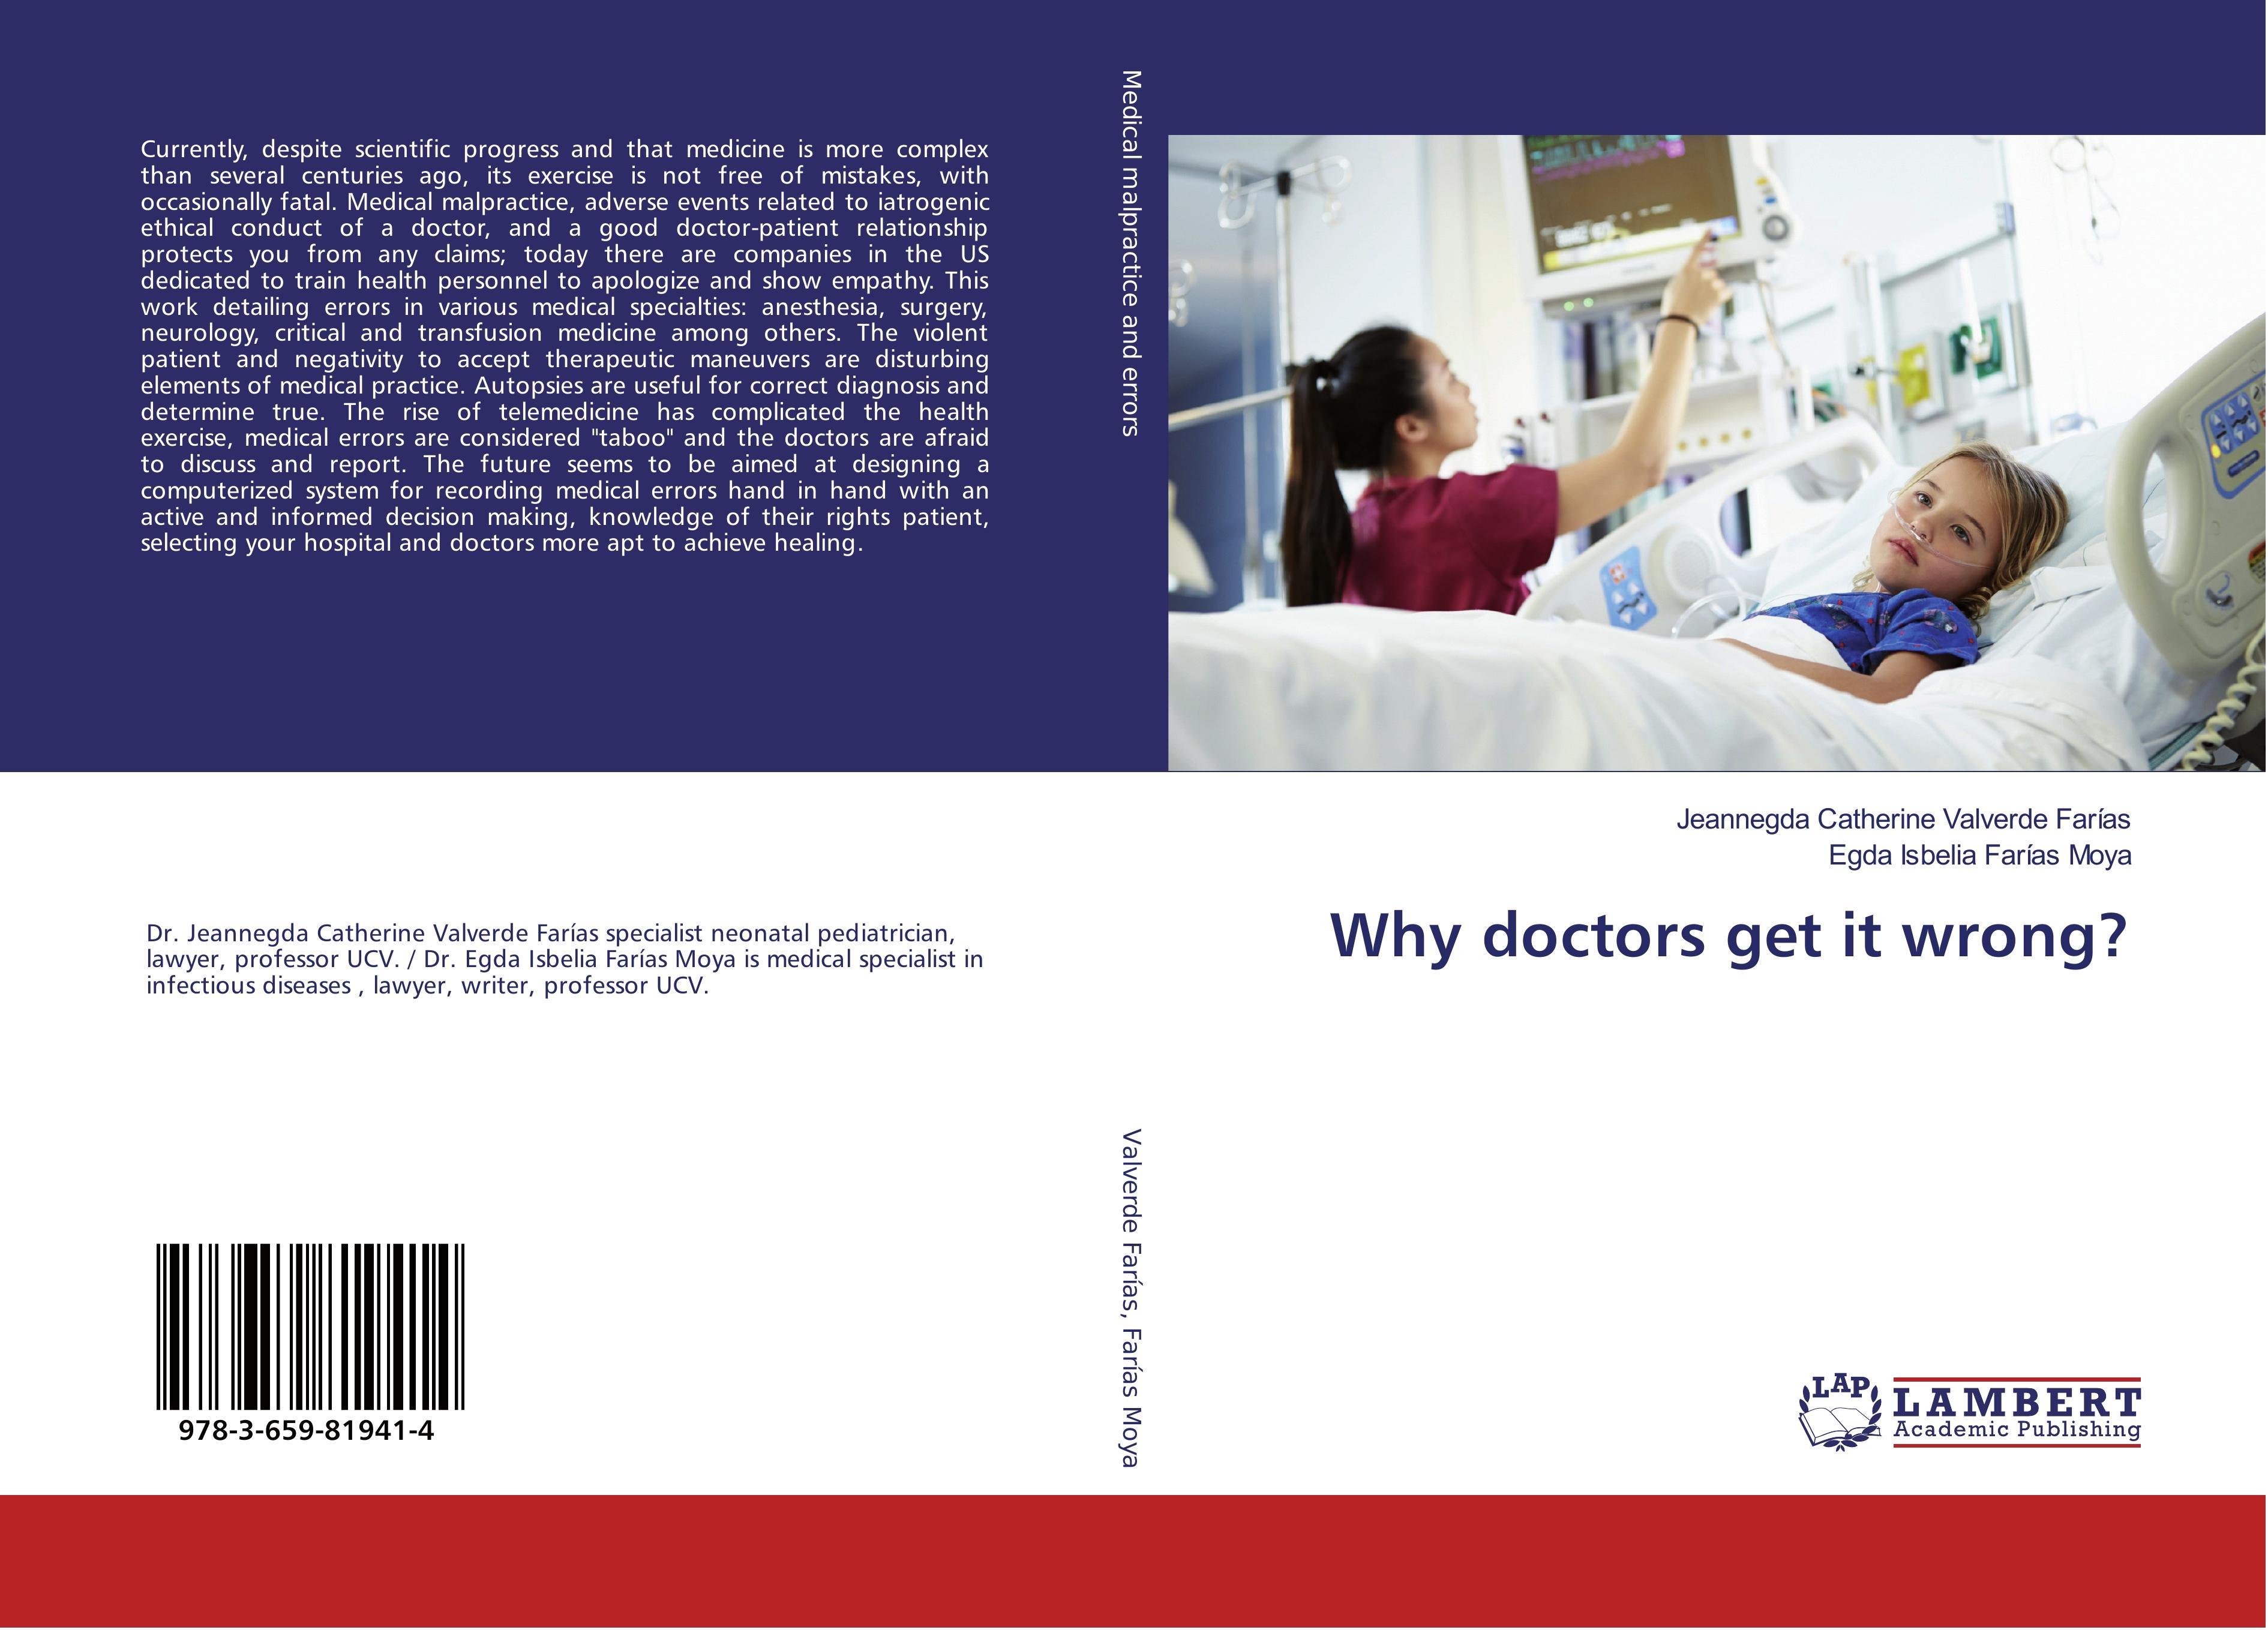 Why doctors get it wrong? - Jeannegda  Catherine Valverde Farías Egda Isbelia Farias Moya